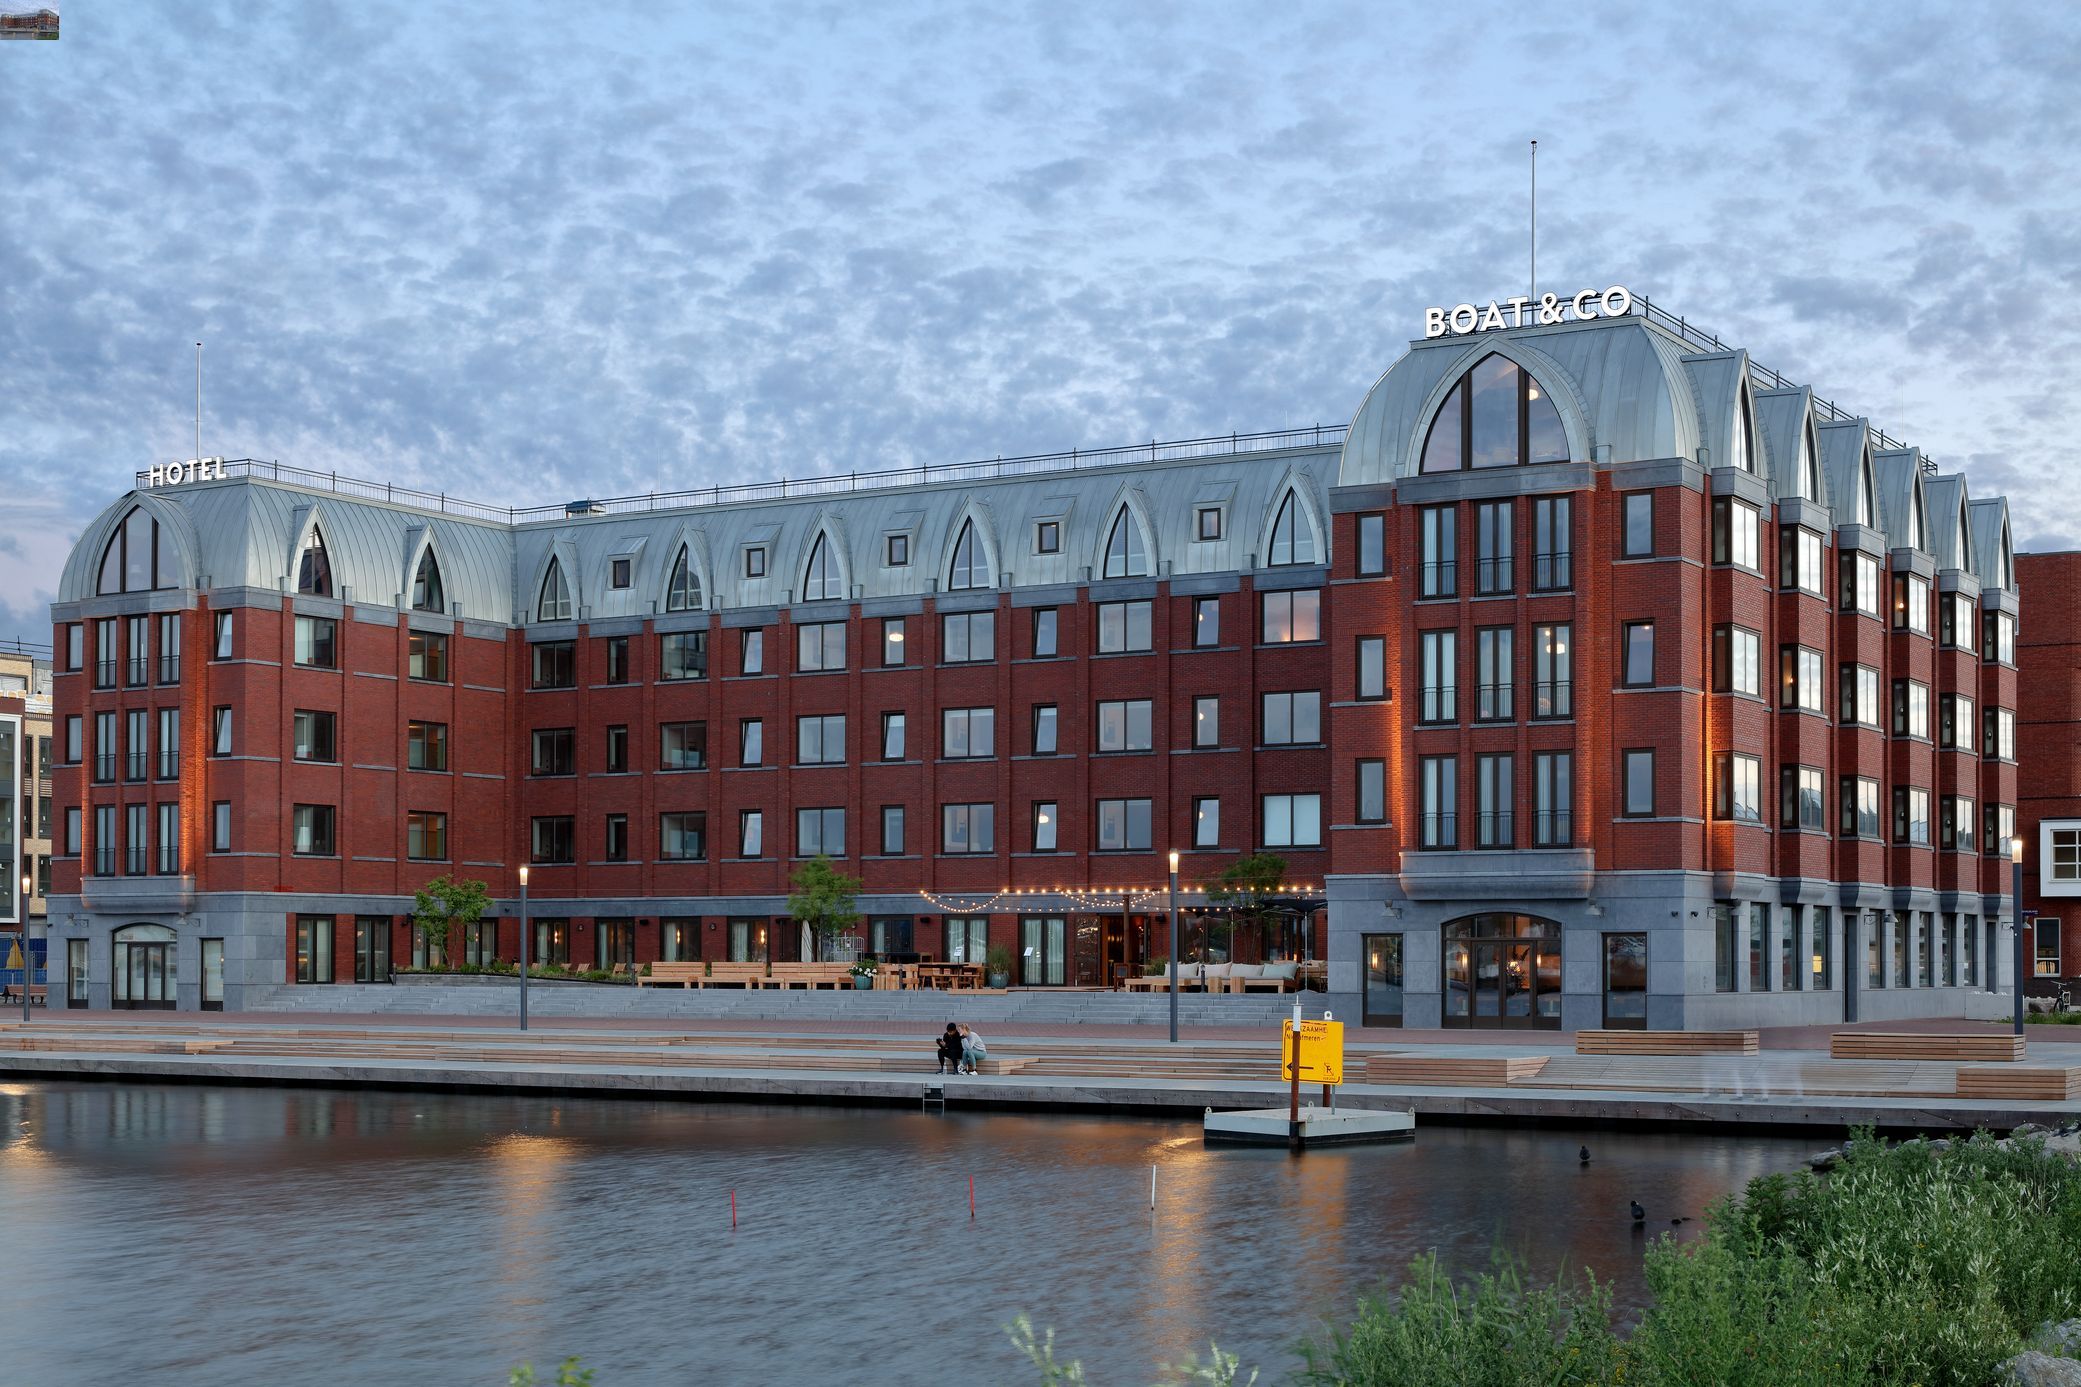 Hotel Boat & Co, Amsterdam, C2C gecertificeerd, RHEINZINK CLASSIC walsblank felsdak, double standing seam technology